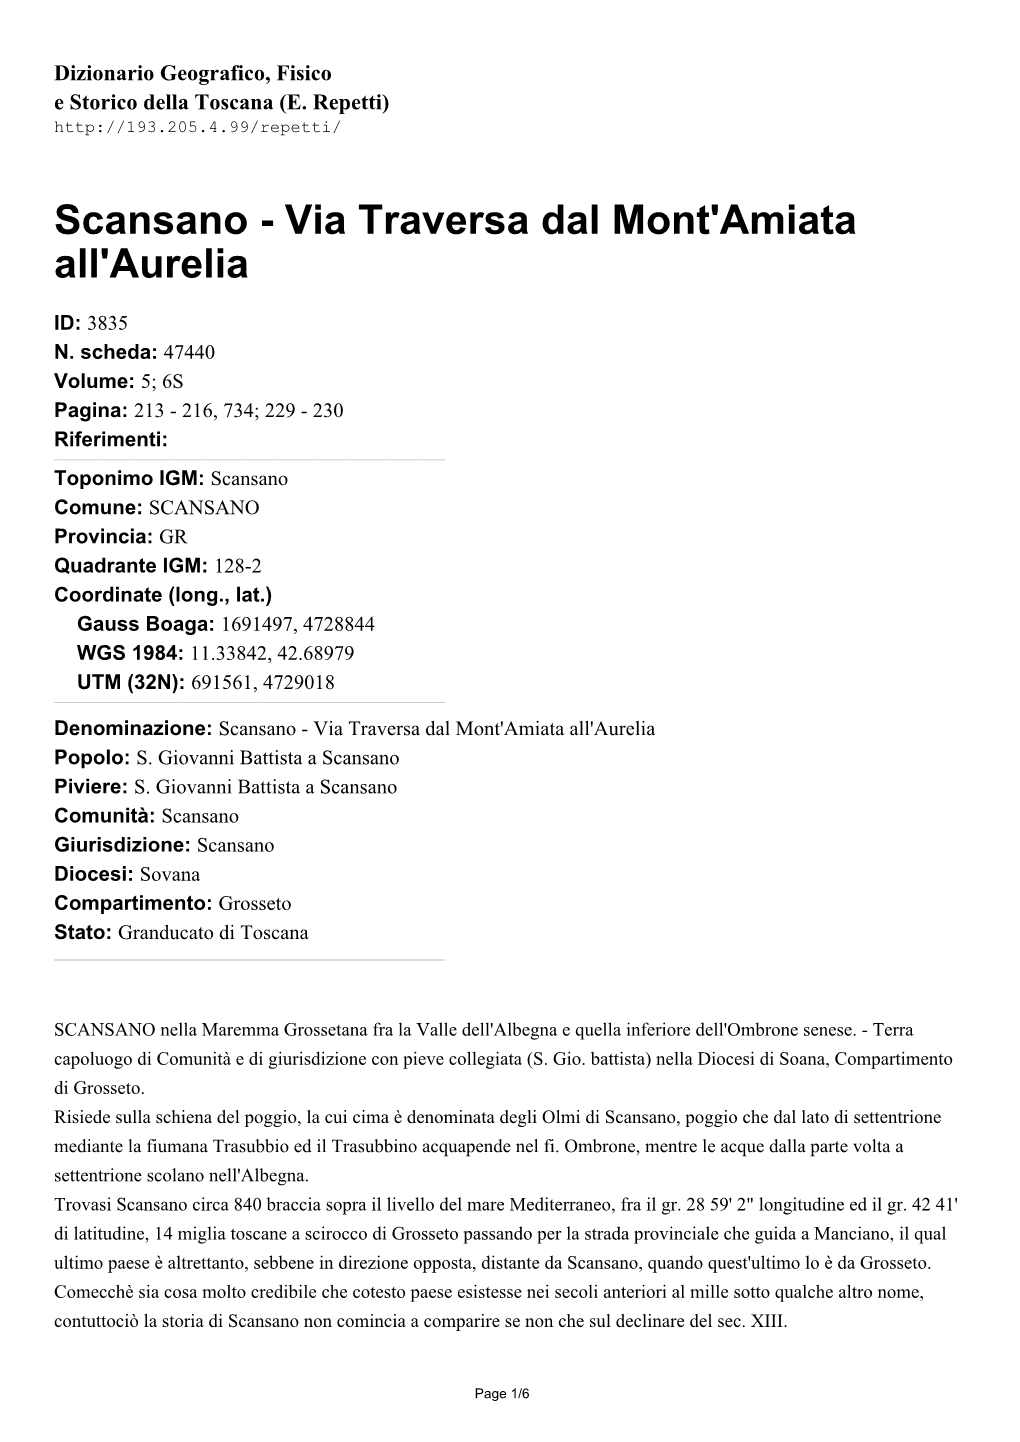 Scansano - Via Traversa Dal Mont'amiata All'aurelia